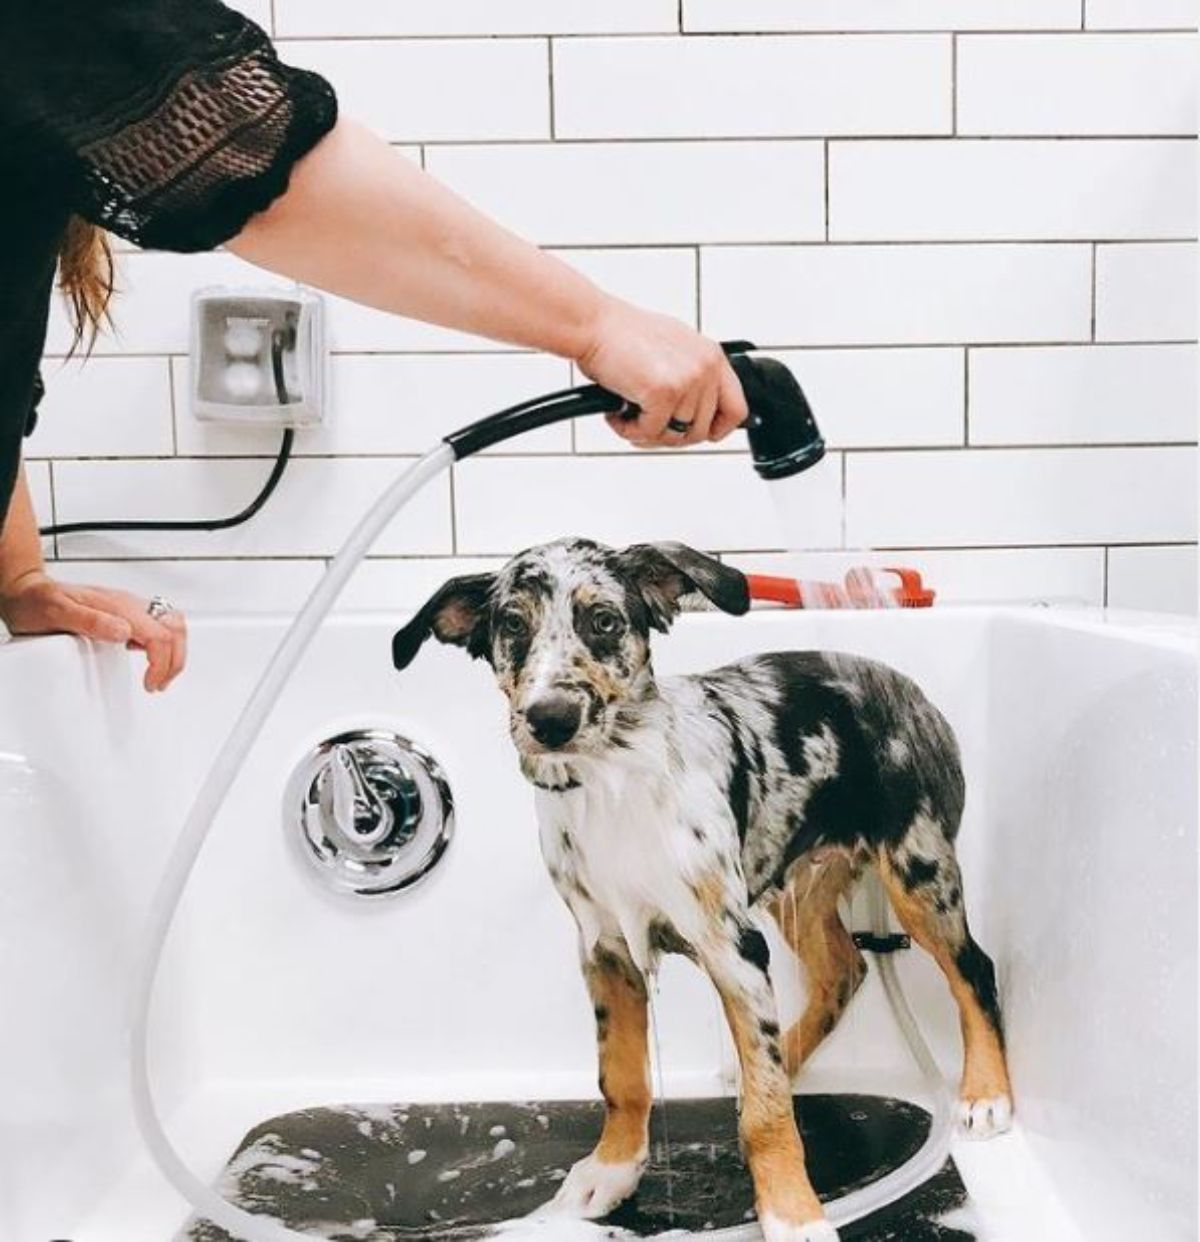 girl spraying water on an Australian Shepherd dog in a bathtub 